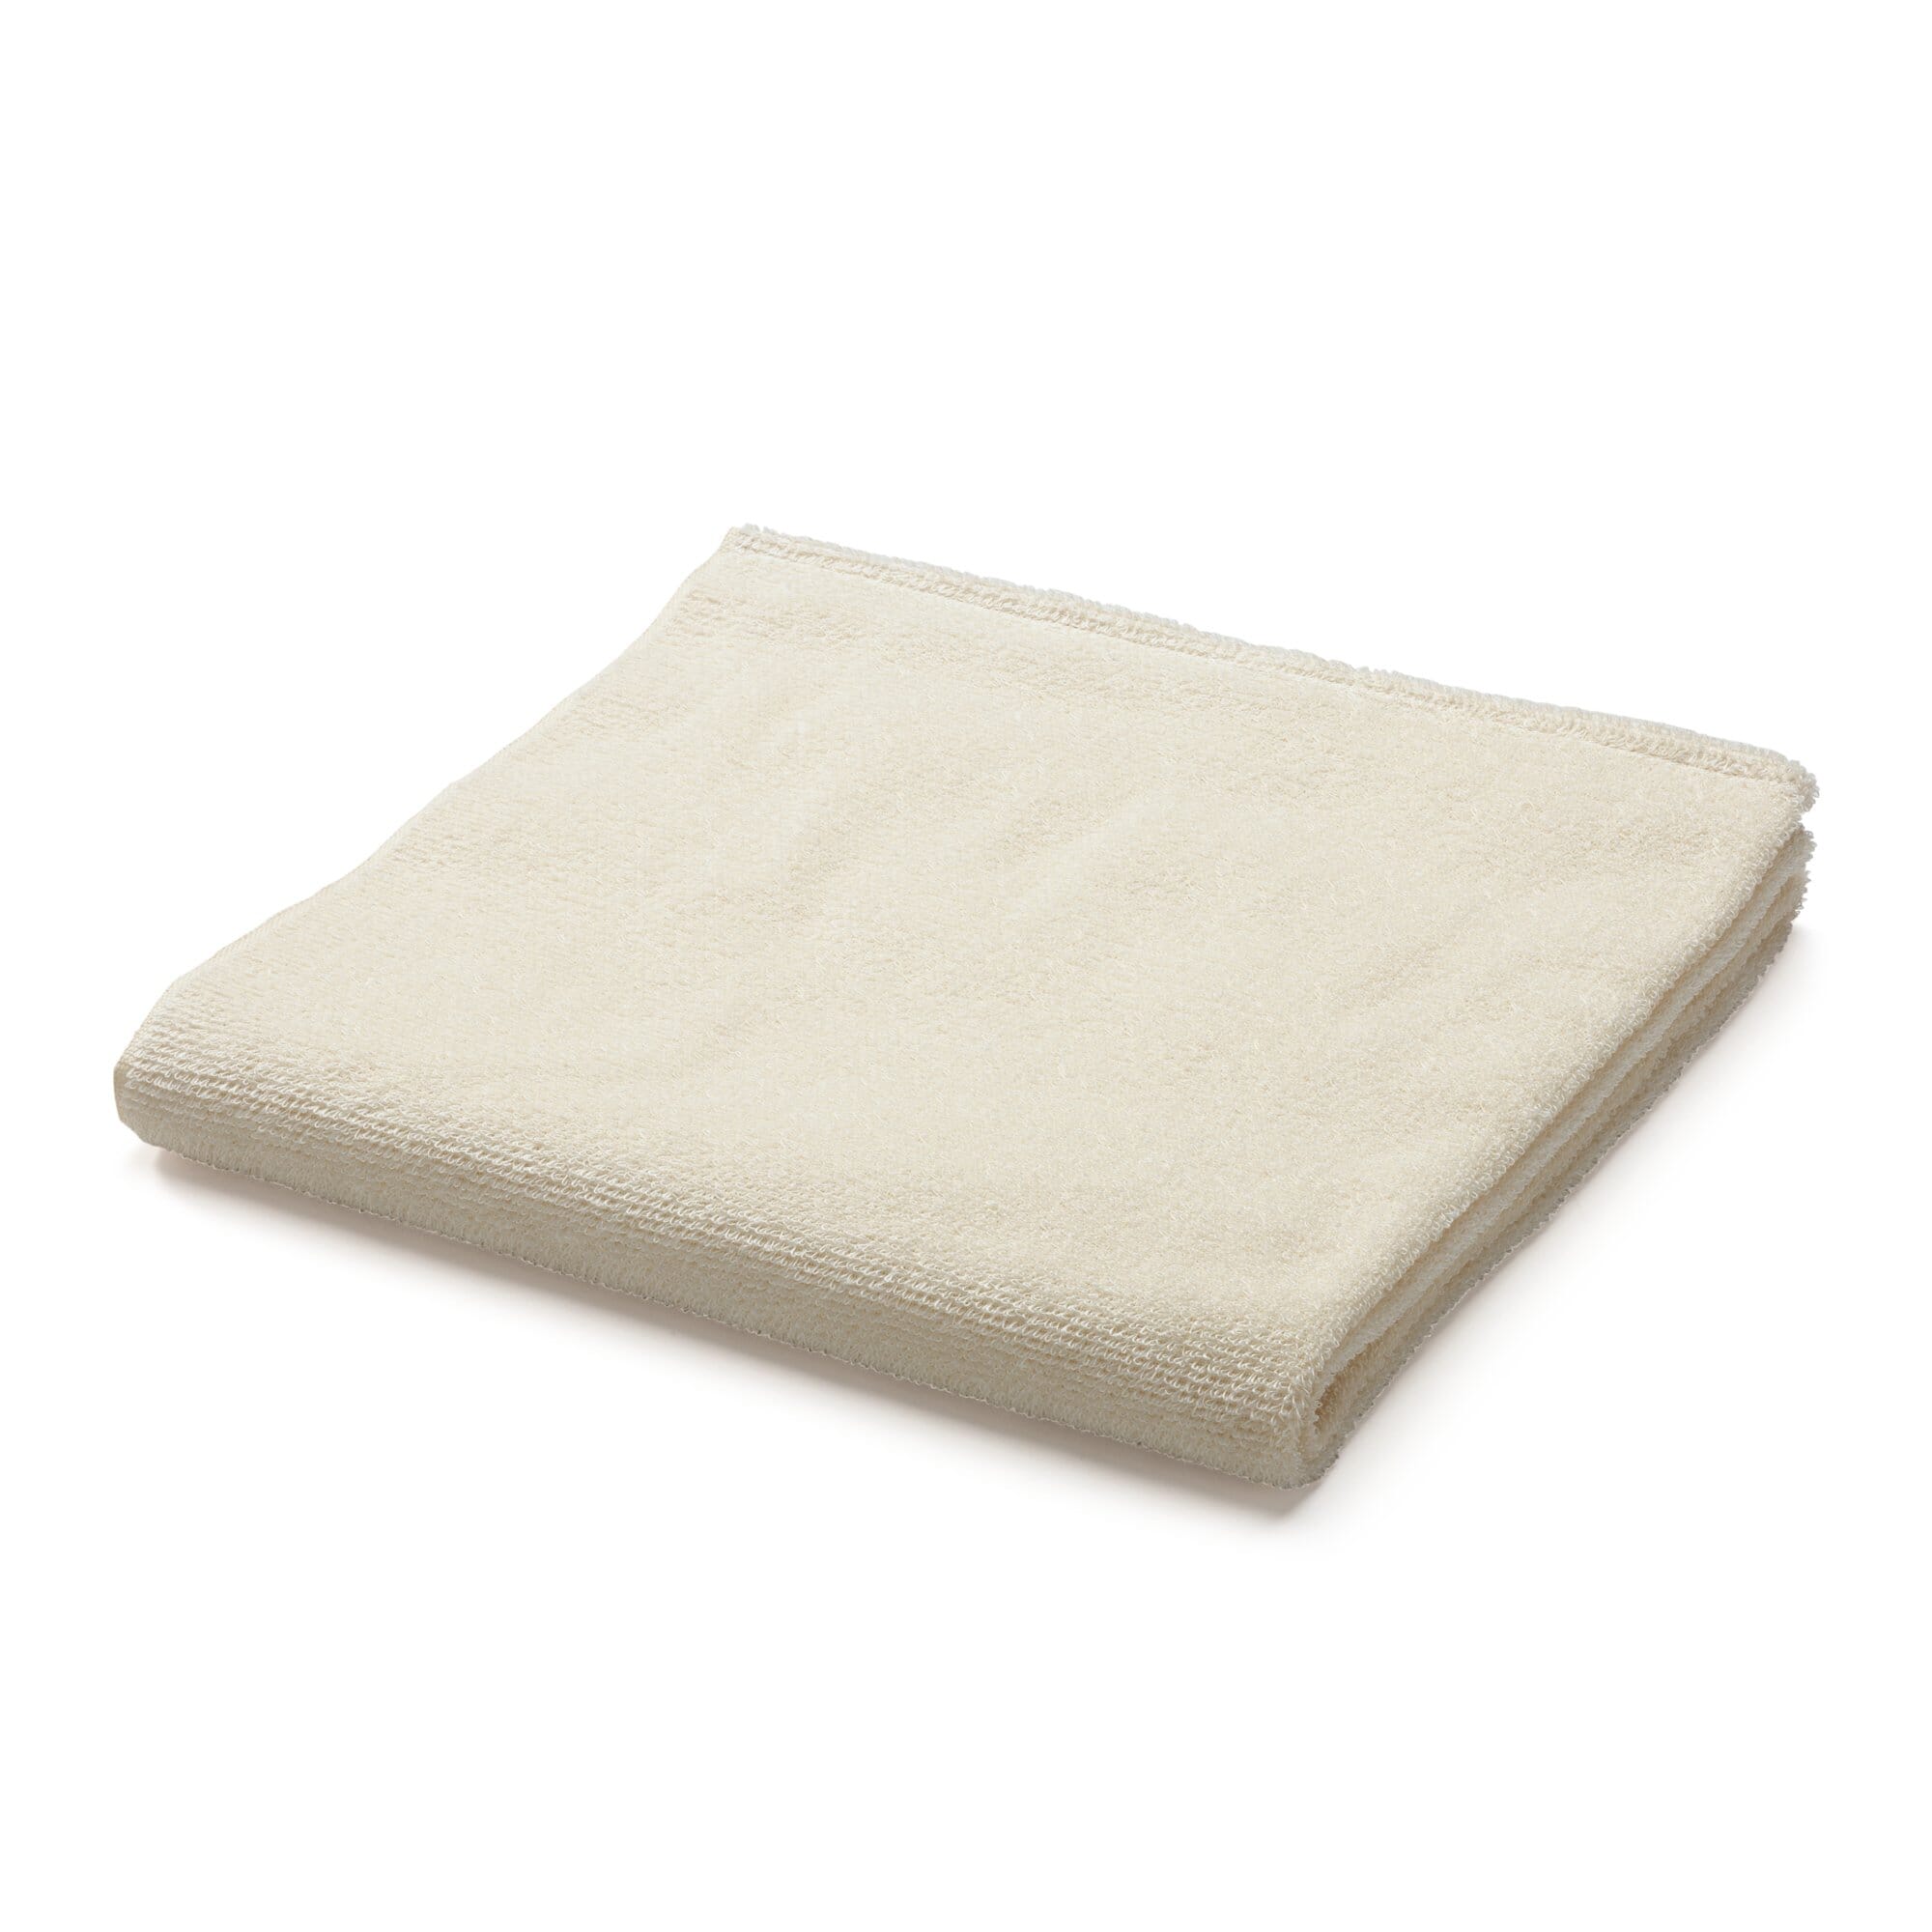 12 new white 22x44 100% cotton terry bath/salon 6.15# dozen gym towels unused 